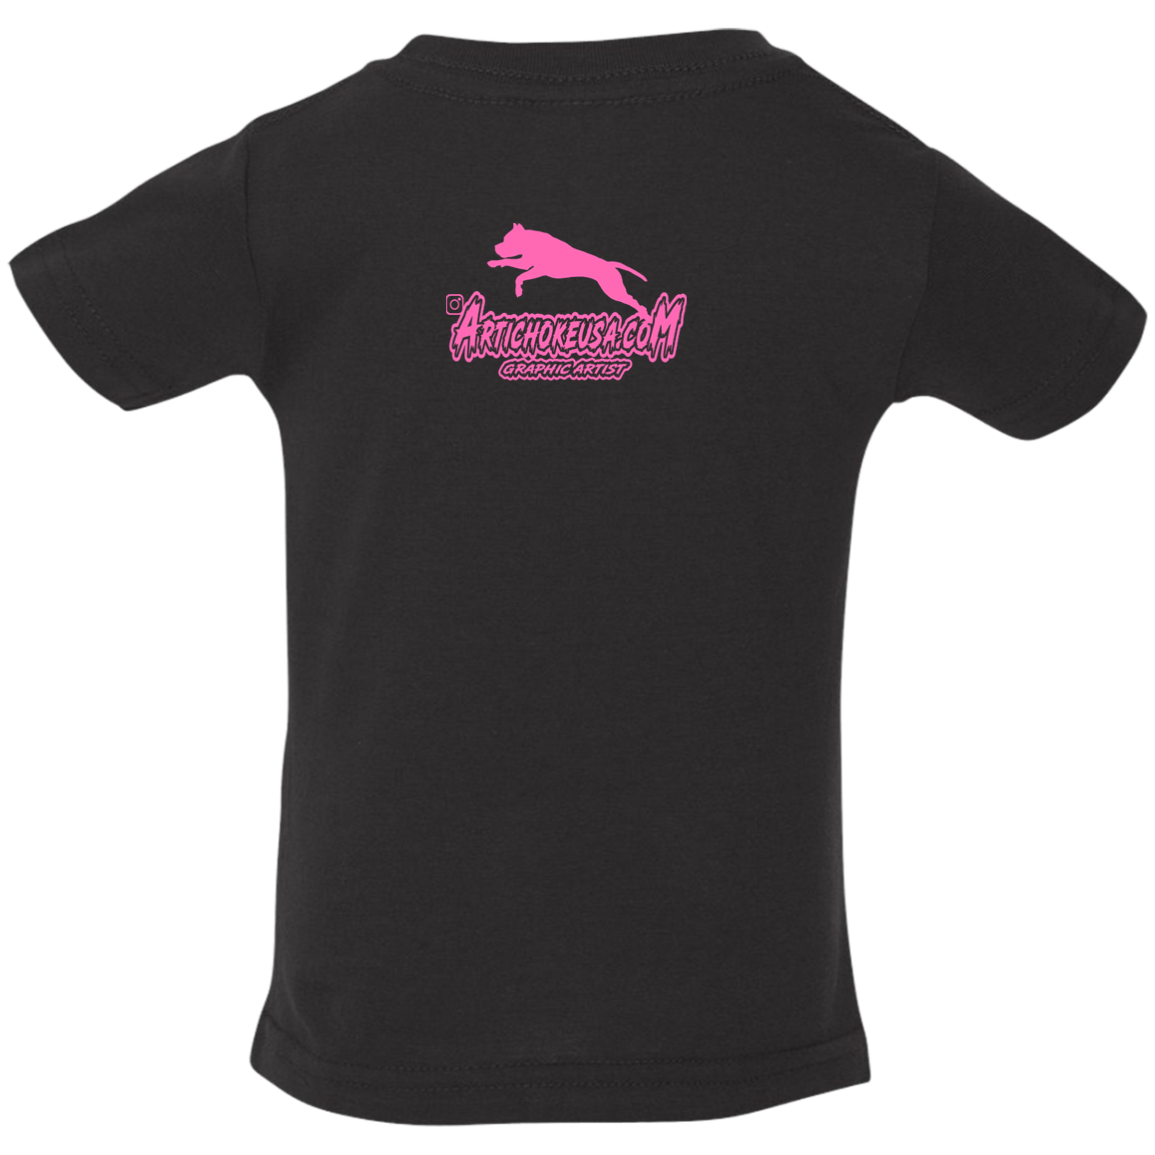 ArtichokeUSA Custom Design. Ruffing the Passer. Pitbull Edition. Female Version. Infant Jersey T-Shirt